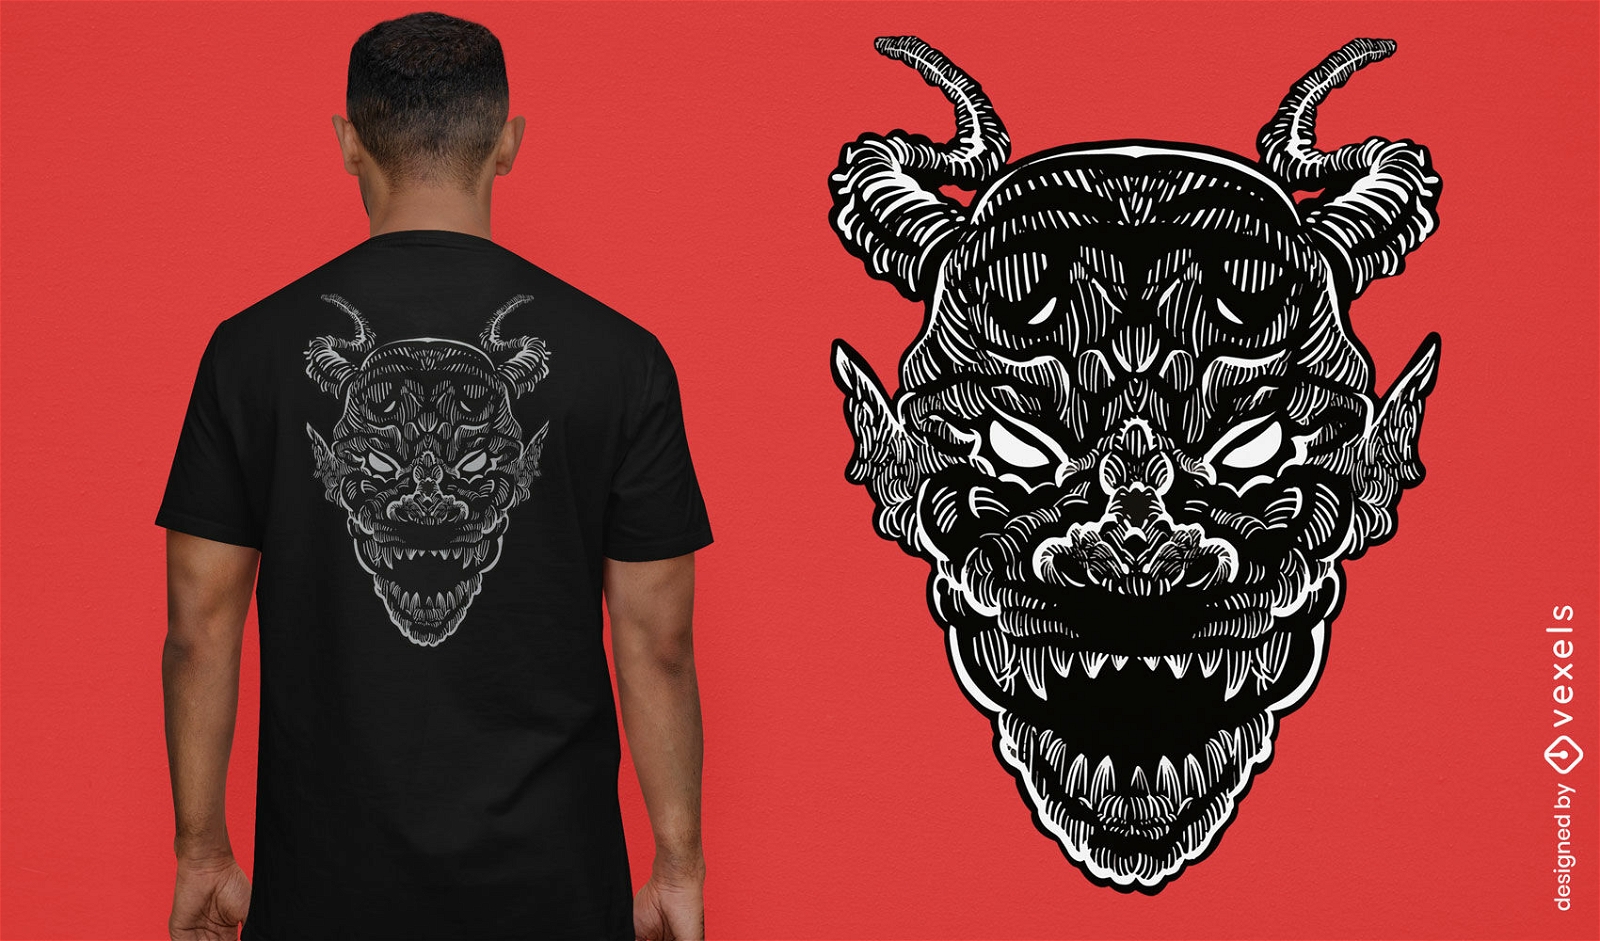 Demon monster head with horns t-shirt design